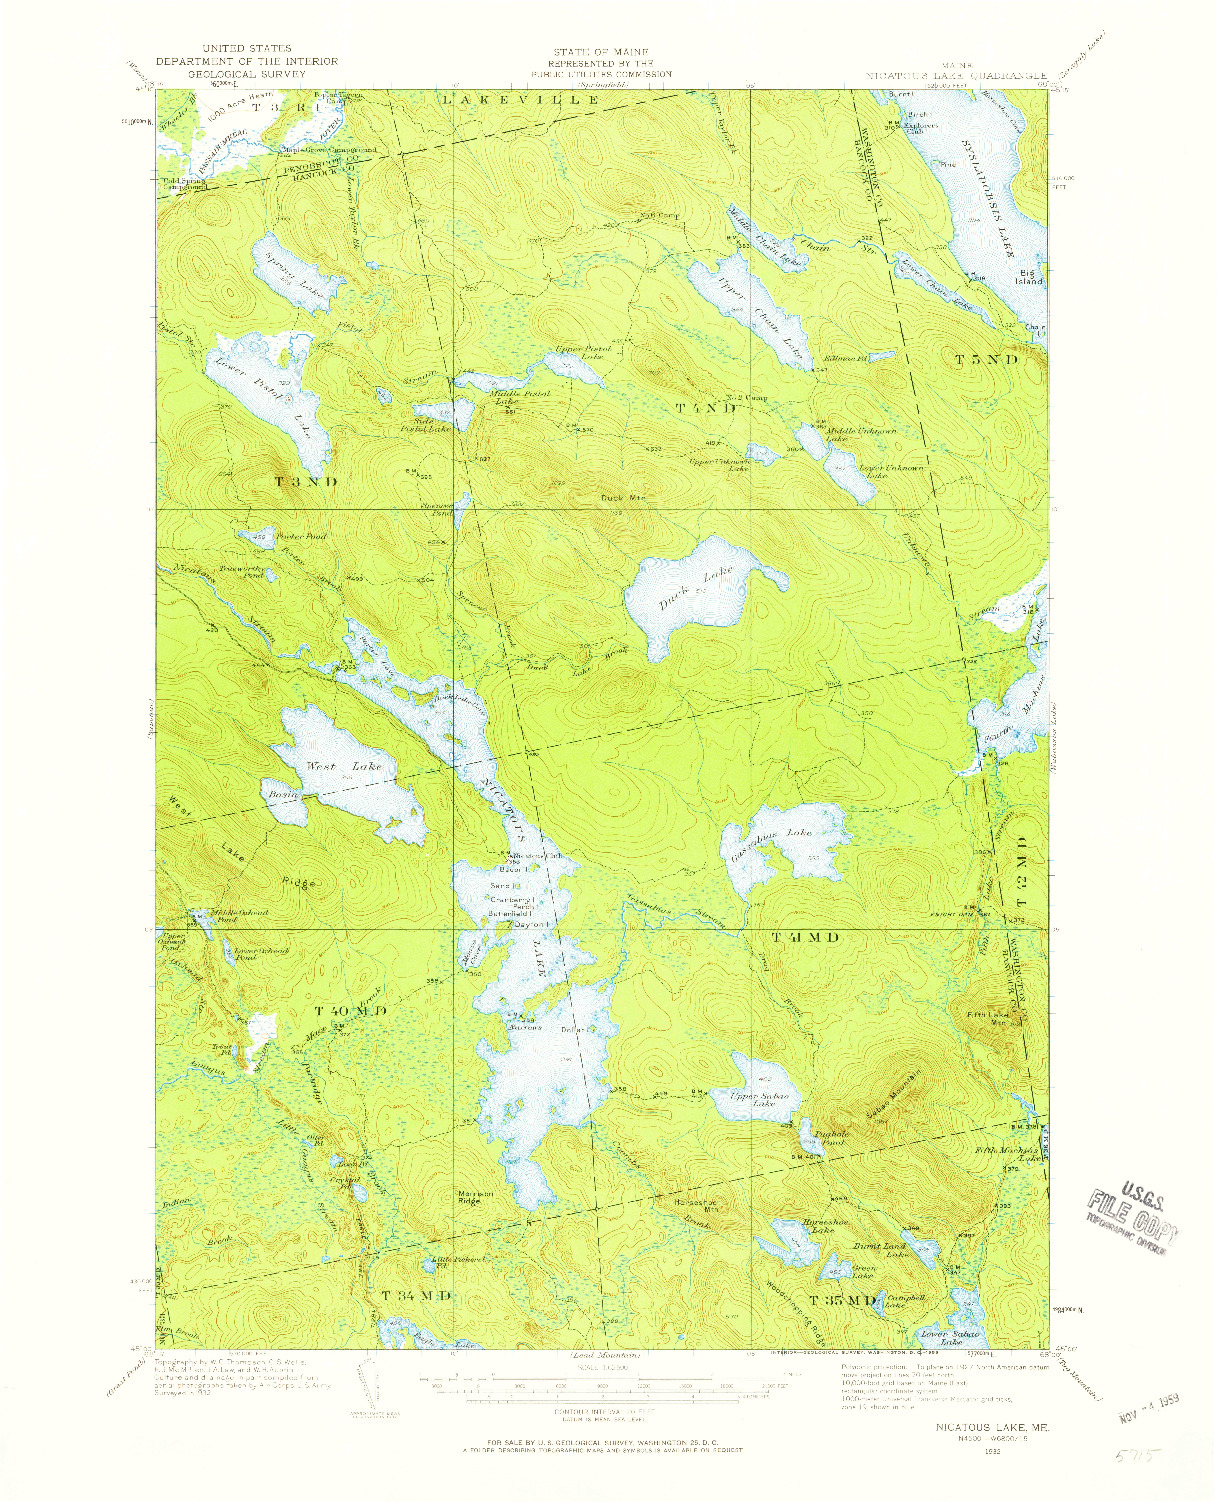 USGS 1:62500-SCALE QUADRANGLE FOR NICATOUS LAKE, ME 1932